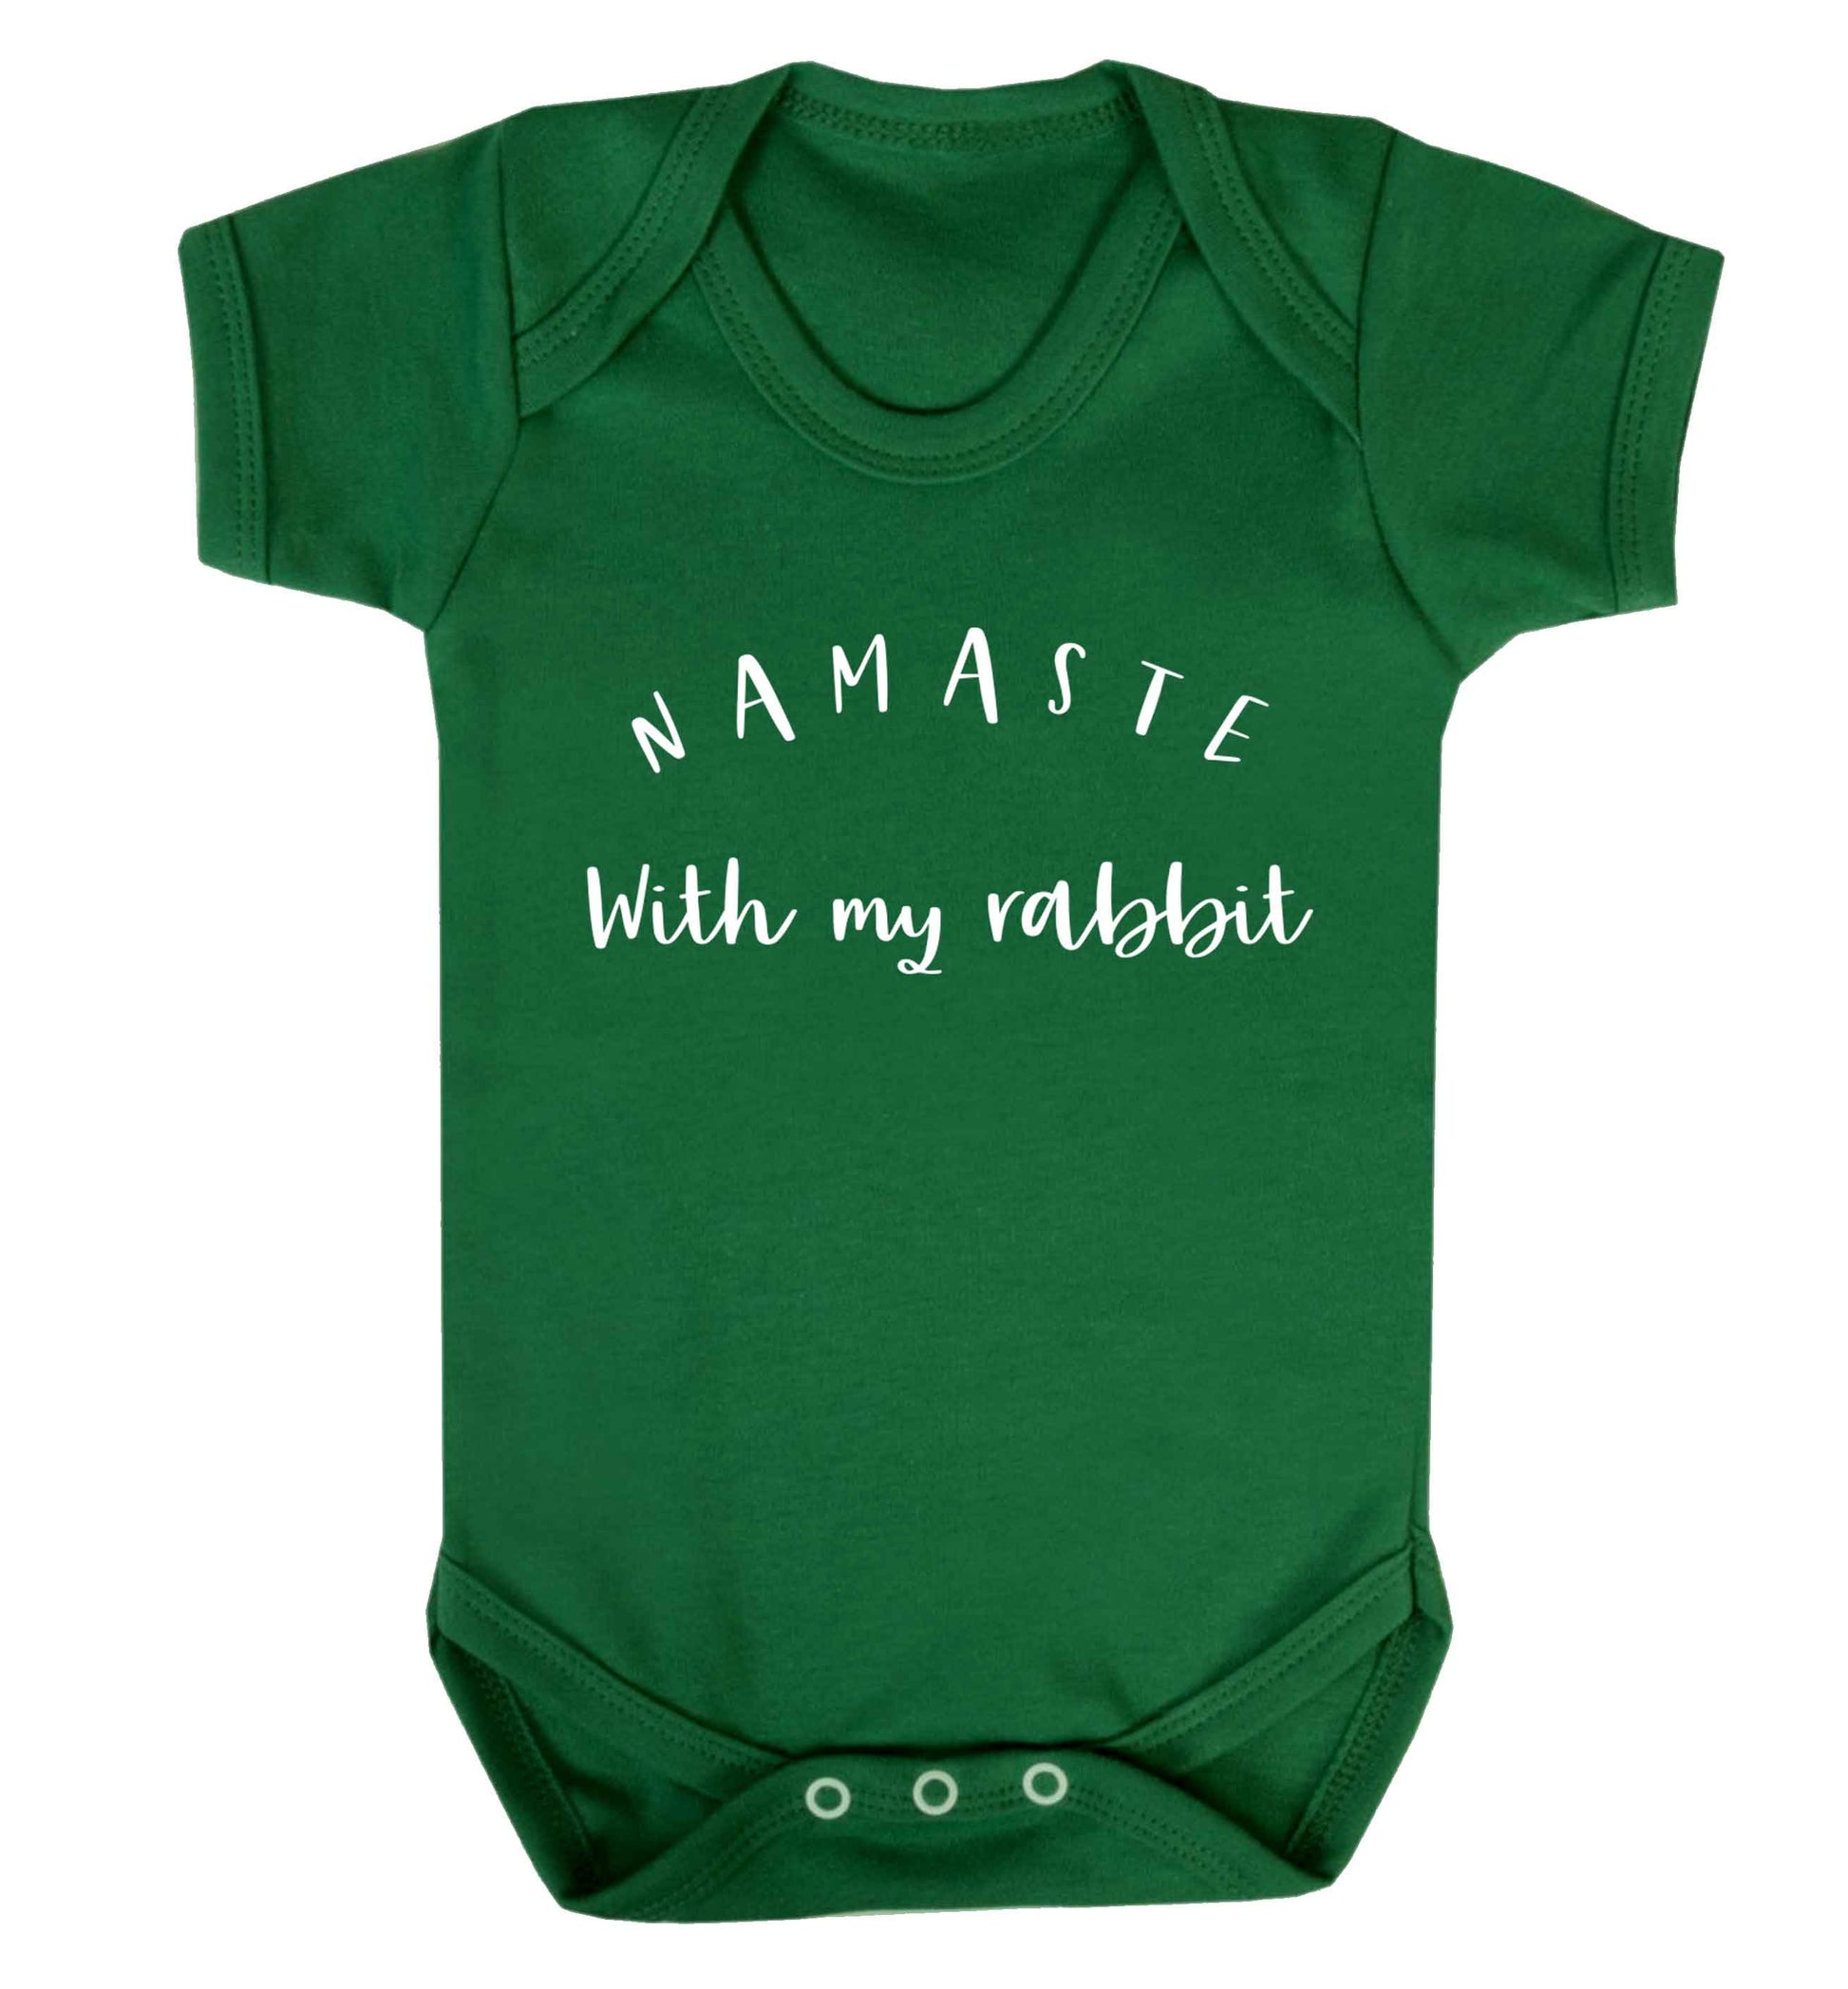 Namaste with my rabbit Baby Vest green 18-24 months